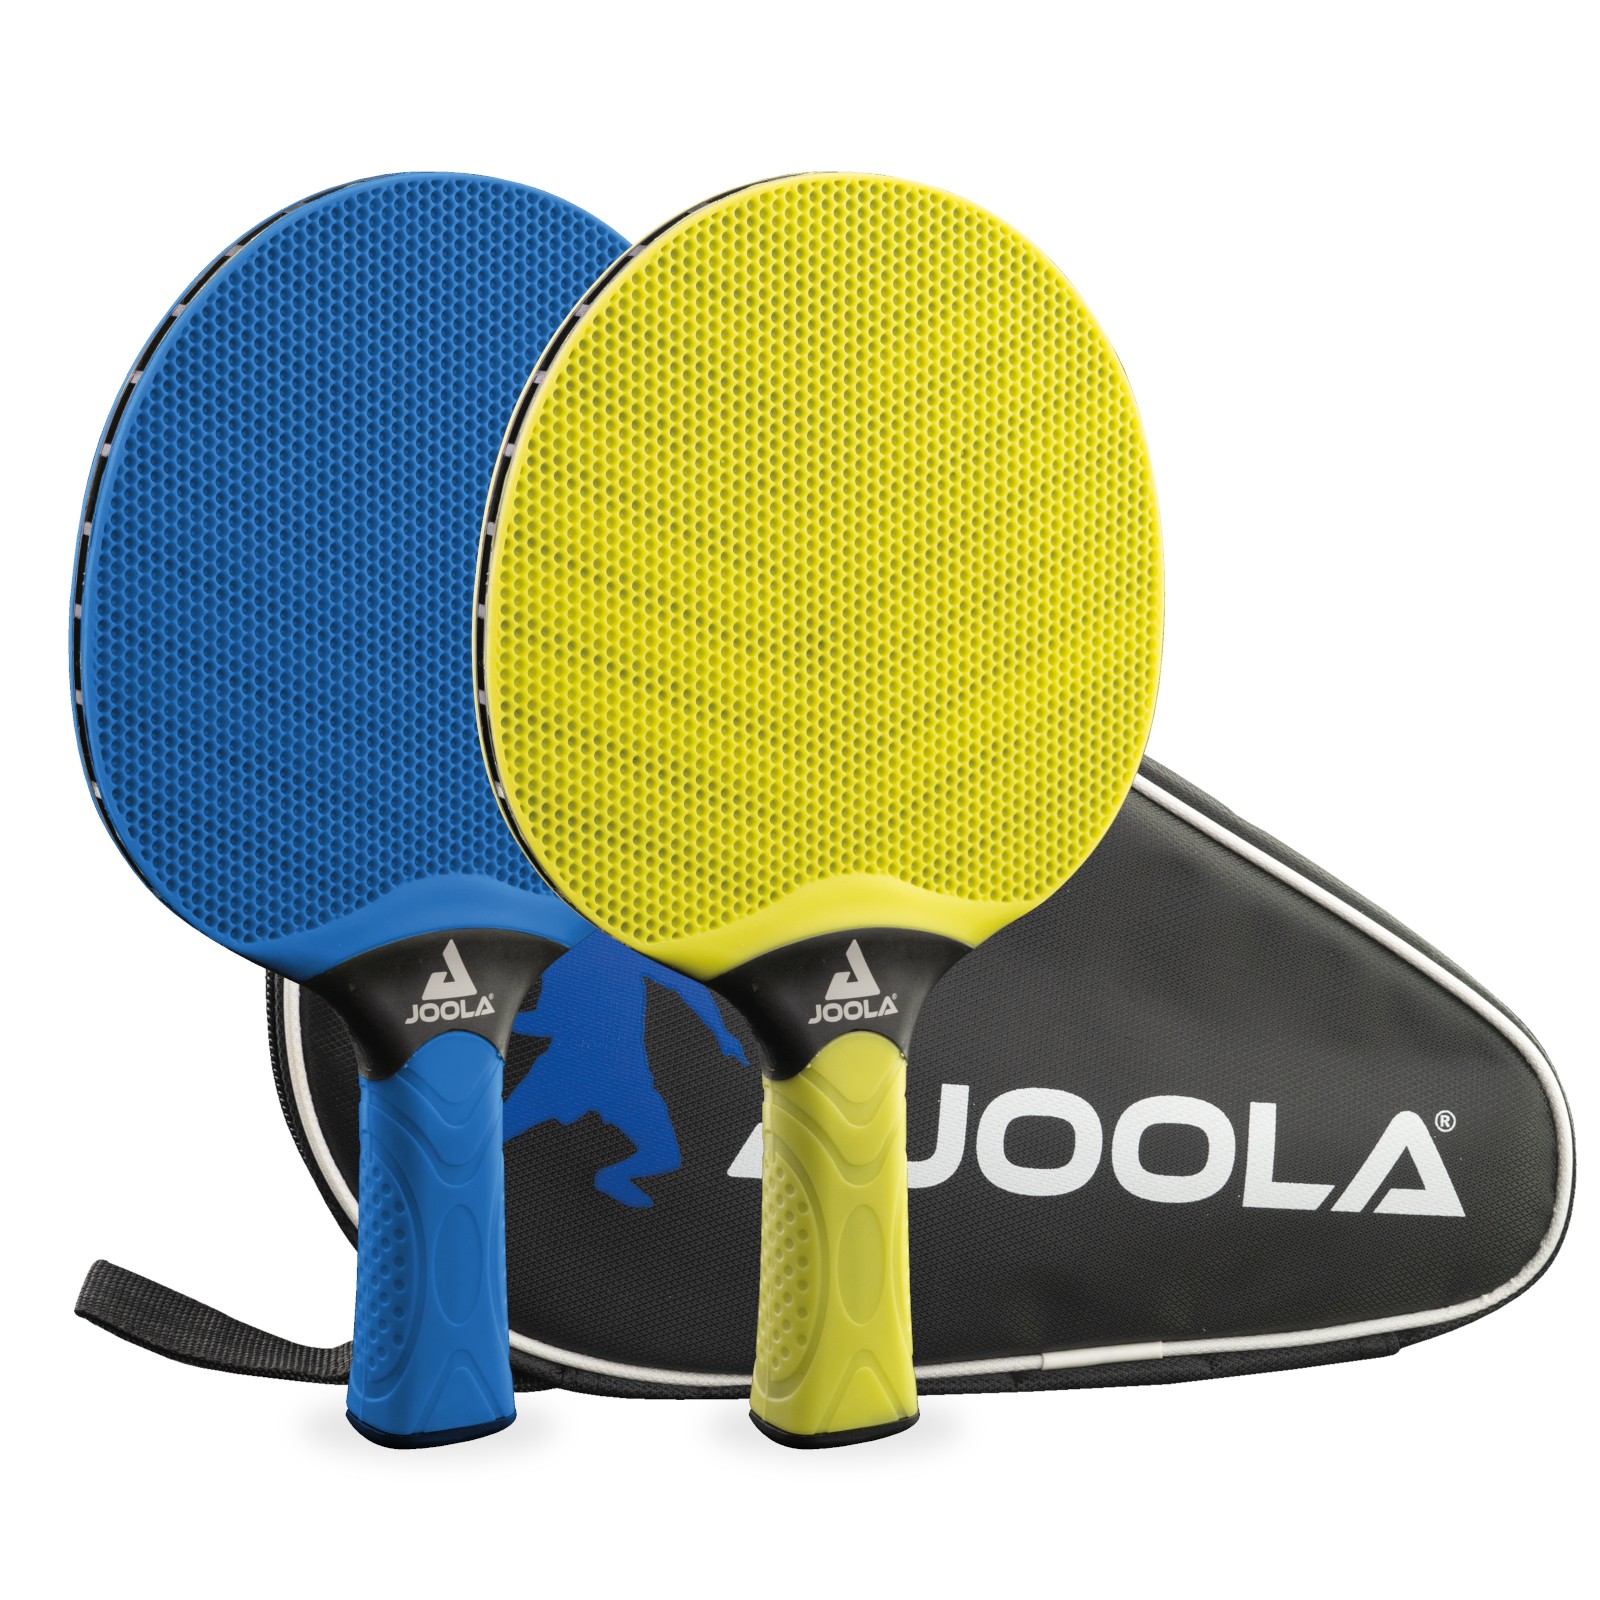 Joola Outdoor Table Tennis Table J500A incl. Accessories Set - Fitshop